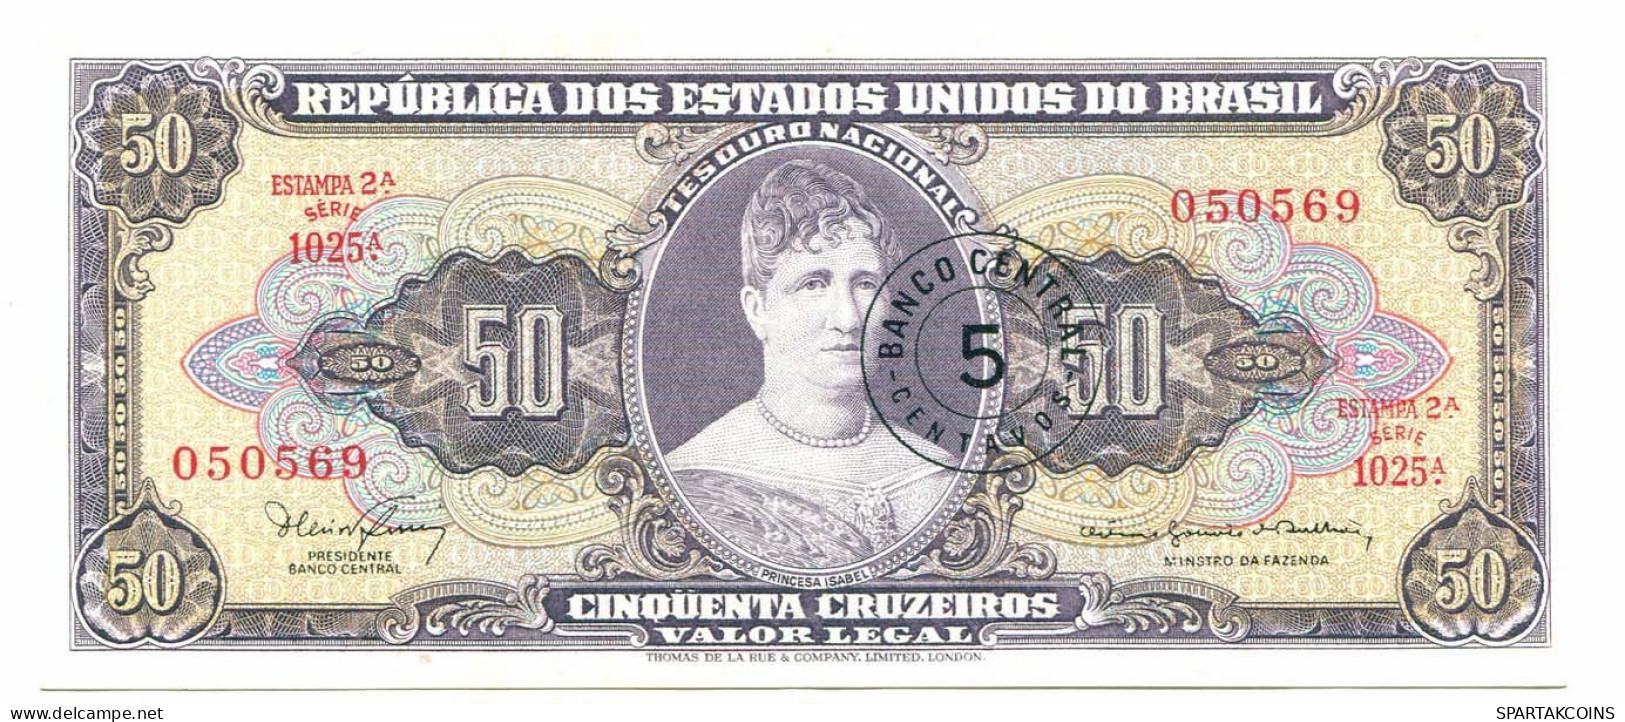 BRASIL 5 CENTAVOS ON 50 CRUZEIROS 1967 SERIE 1025A UNC Paper Money #P10841.4 - [11] Emisiones Locales